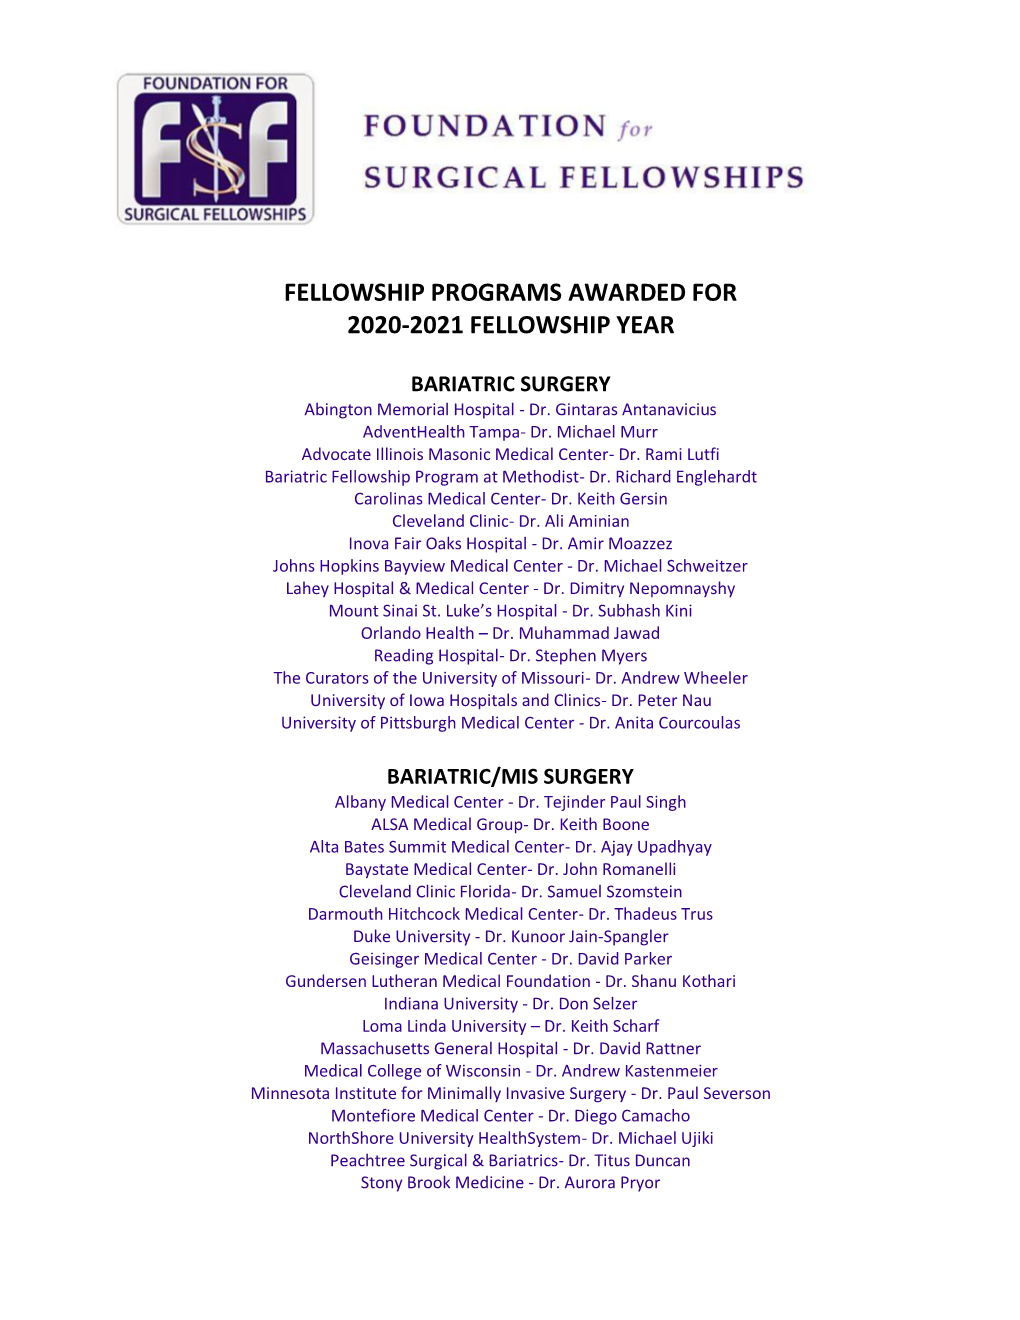 Fellowship Programs Awarded for 2020-2021 Fellowship Year